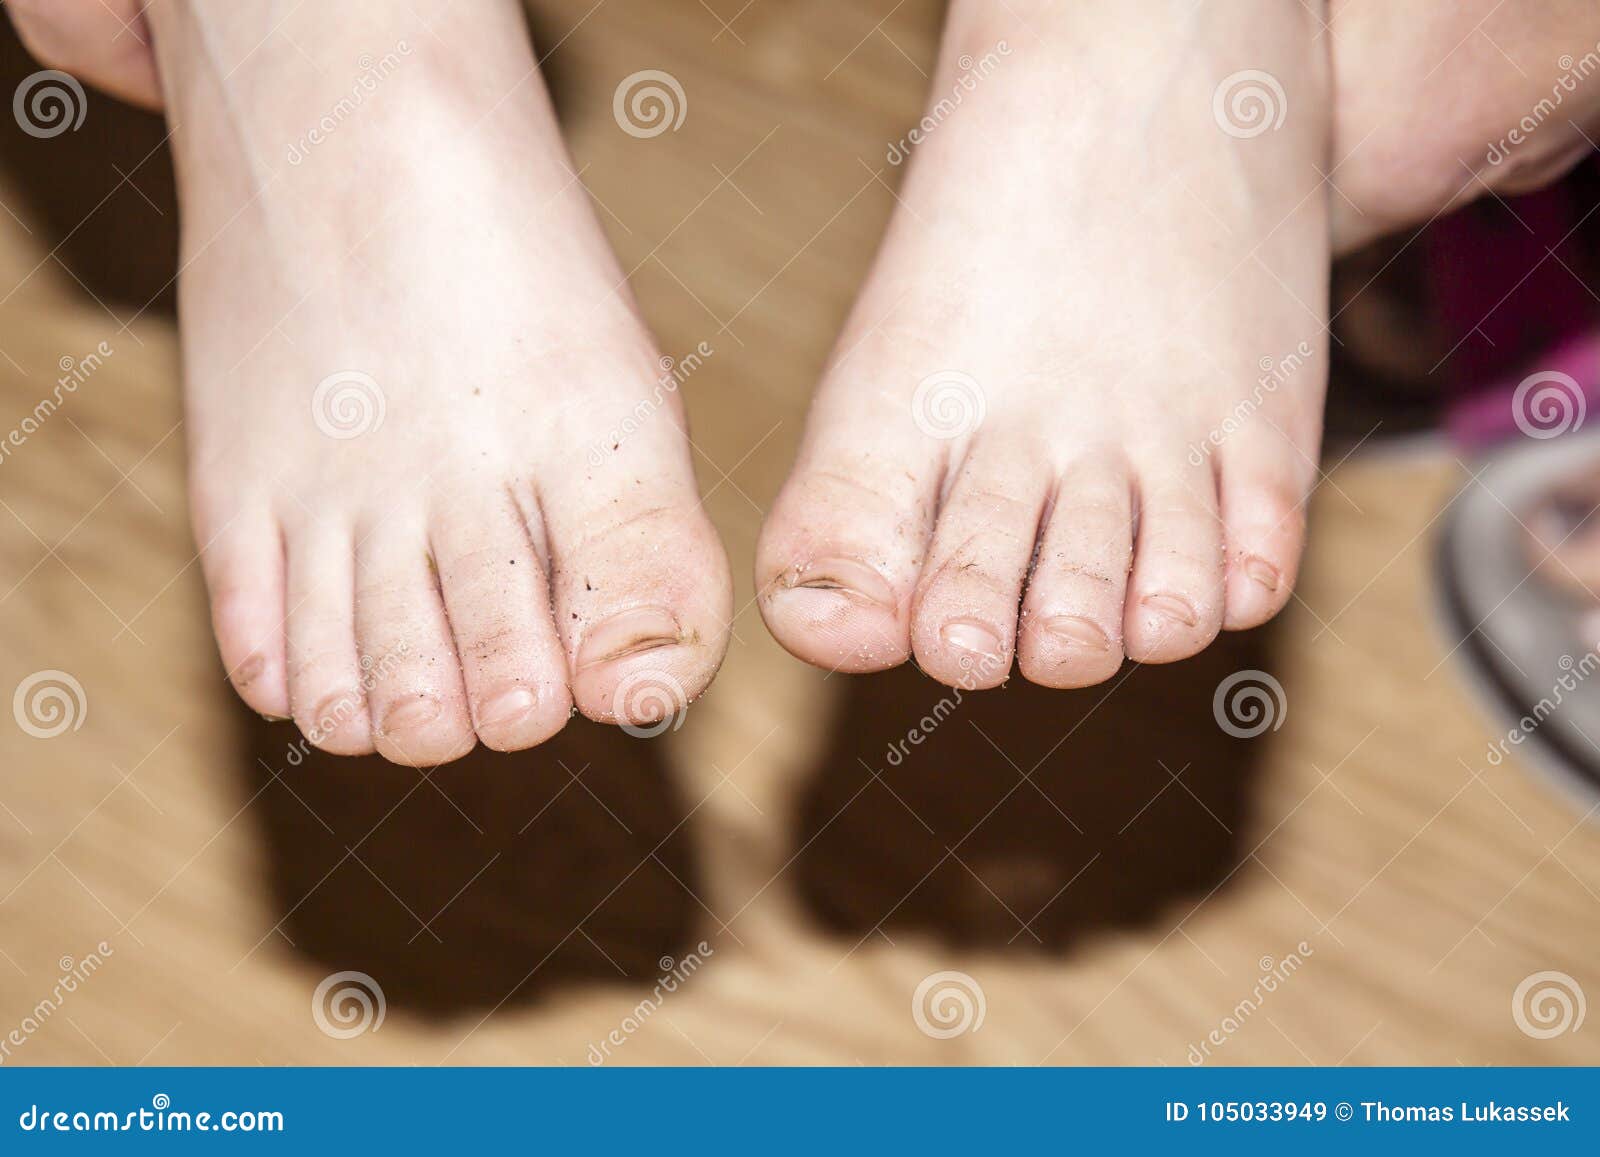 Boys Dirty Feet